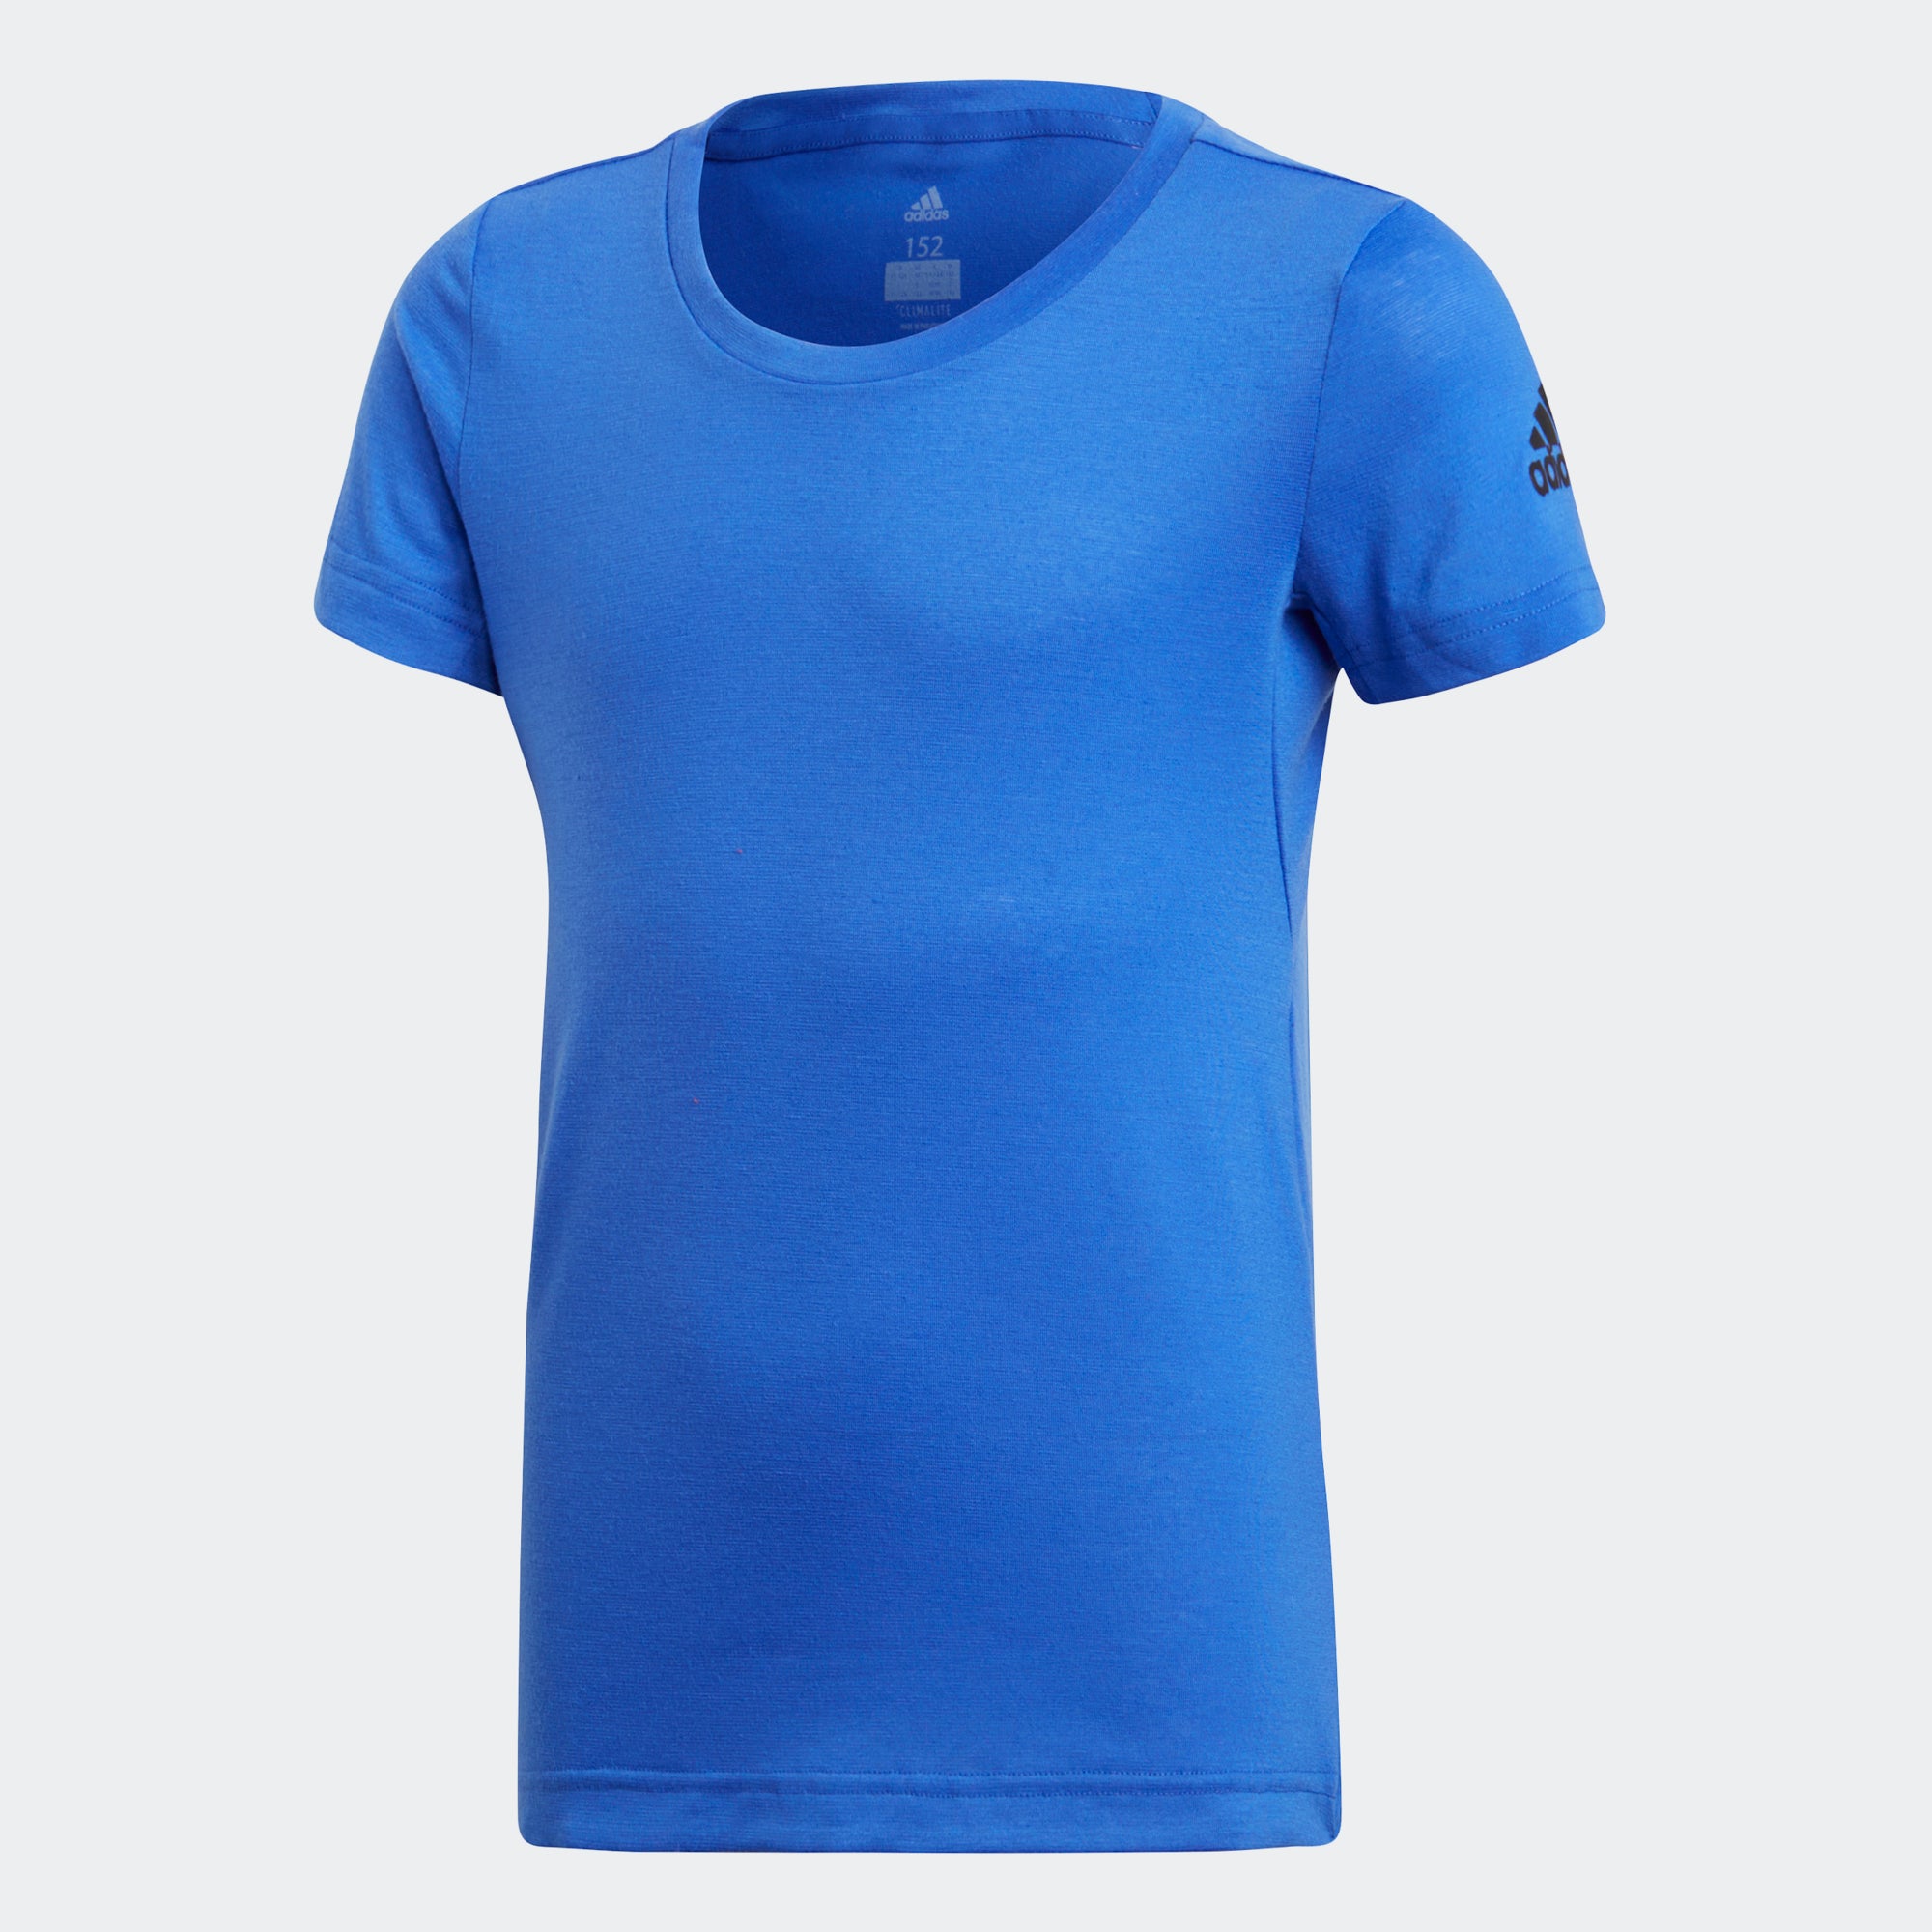 adidas blue shirt womens